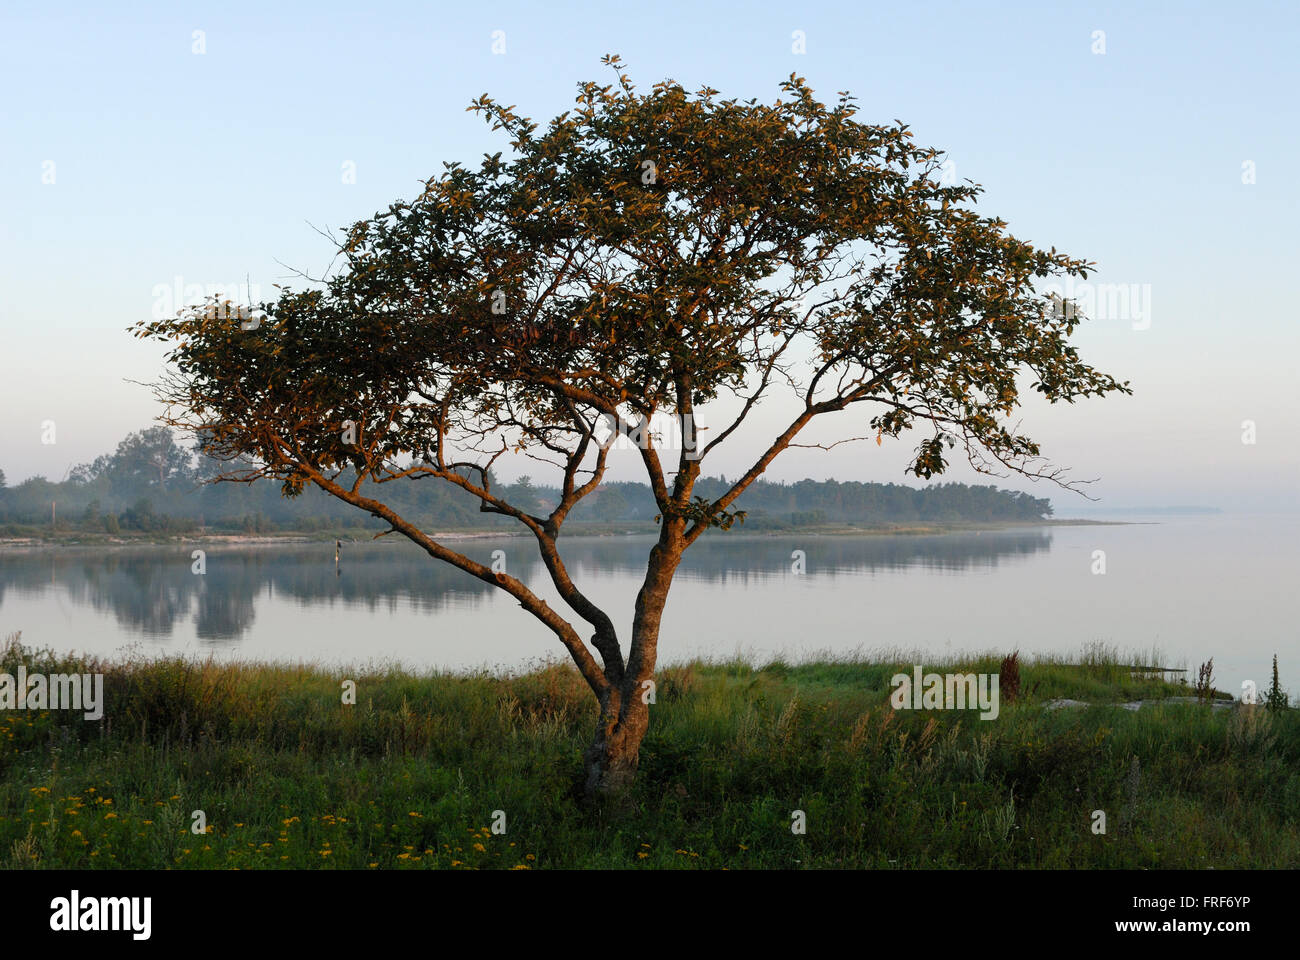 Gotland: Insel der Wikinger.   -06/08/2007 - Europa - ruhige Atmosphäre in der Morgendämmerung.   -Laurent Paillier / Le Pictorium Stockfoto